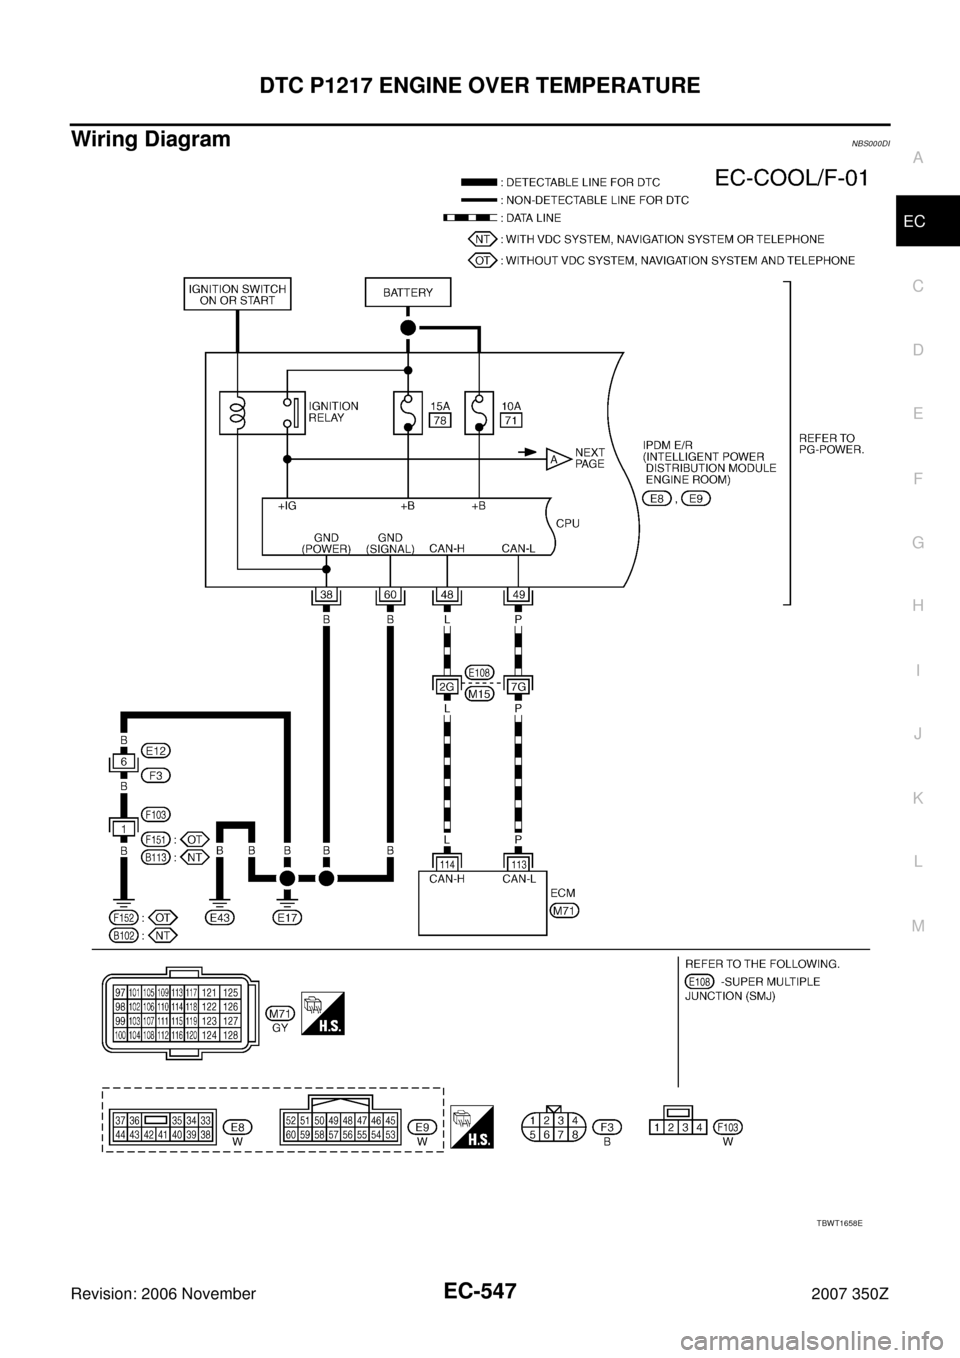 NISSAN 350Z 2007 Z33 Engine Control Workshop Manual DTC P1217 ENGINE OVER TEMPERATURE
EC-547
C
D
E
F
G
H
I
J
K
L
MA
EC
Revision: 2006 November2007 350Z
Wiring DiagramNBS000DI
TBWT1658E 